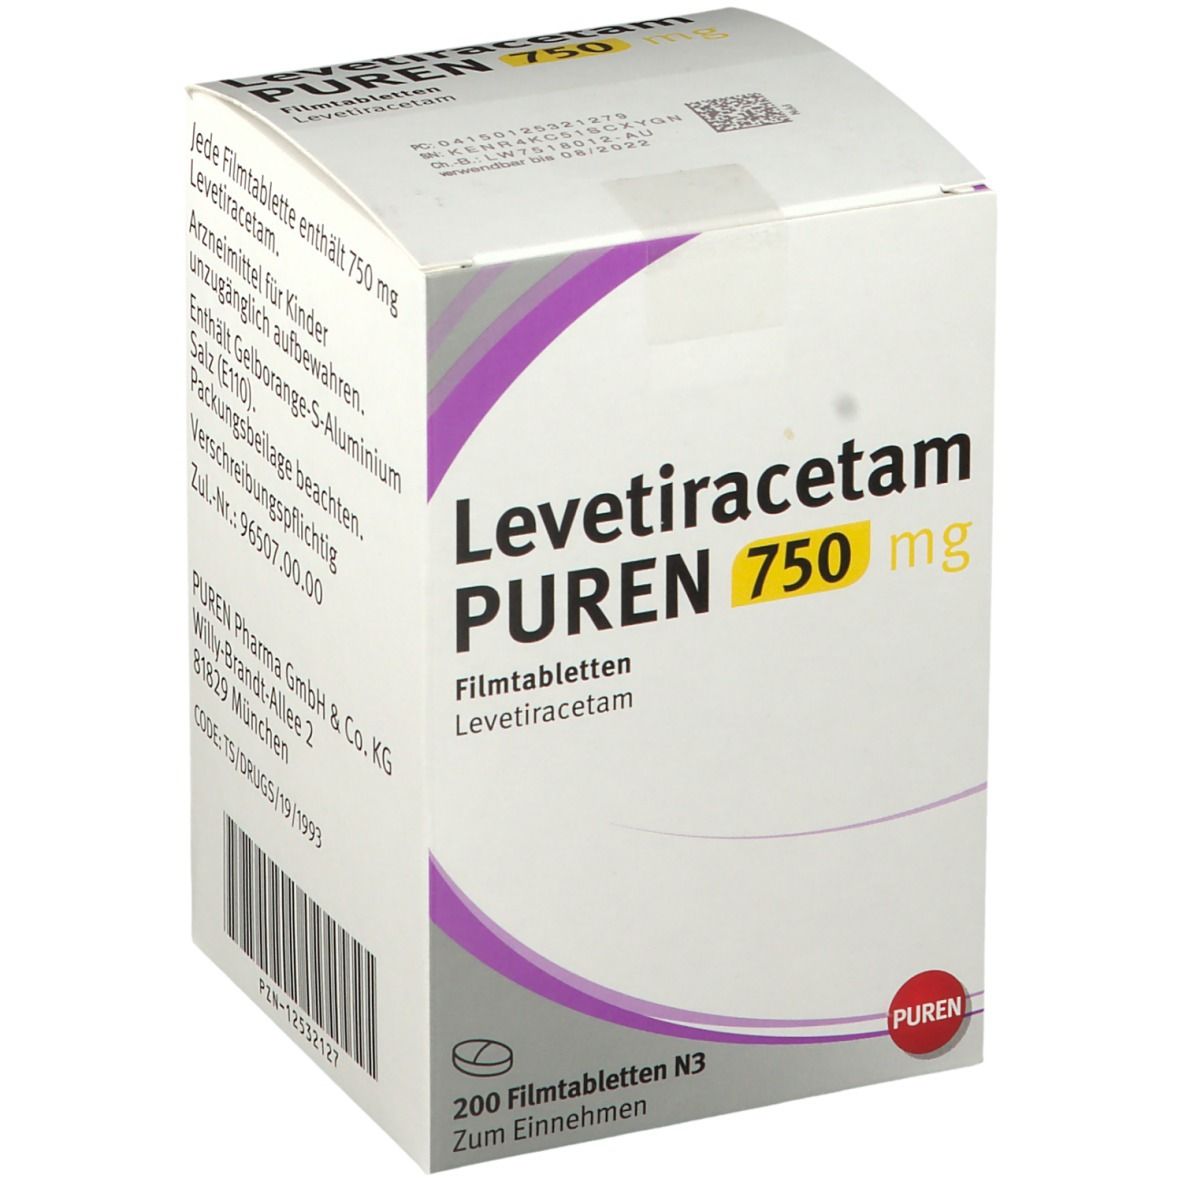 Levetiracetam PUREN 750 mg